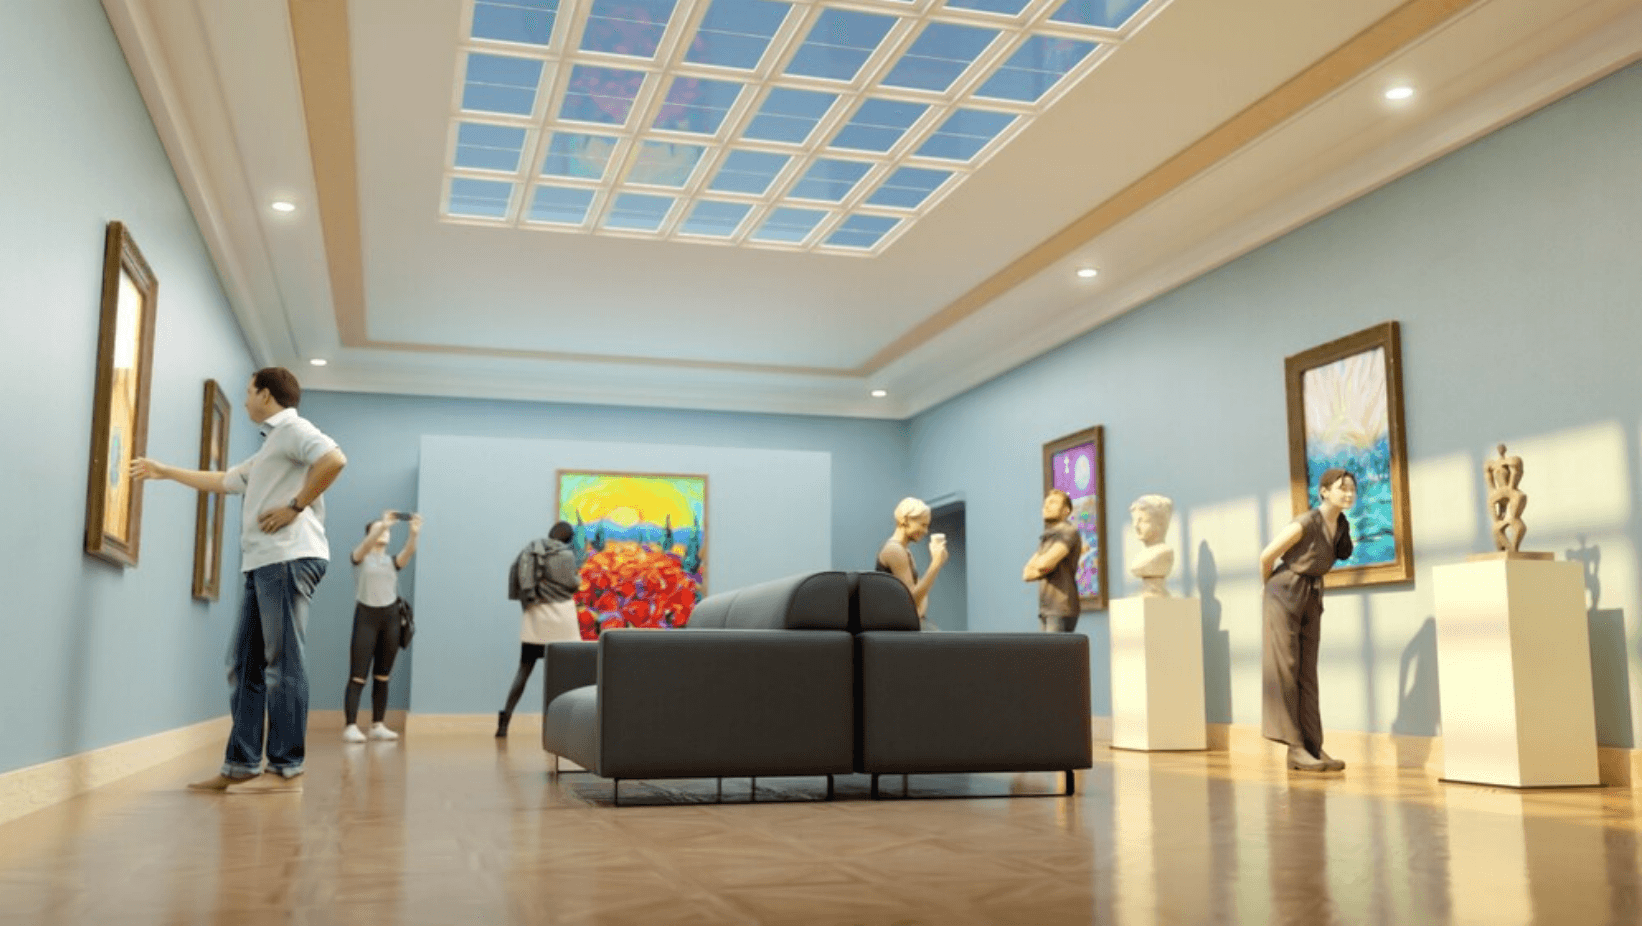 Innerscene Virtual Sun Model A7 installed at an art gallery